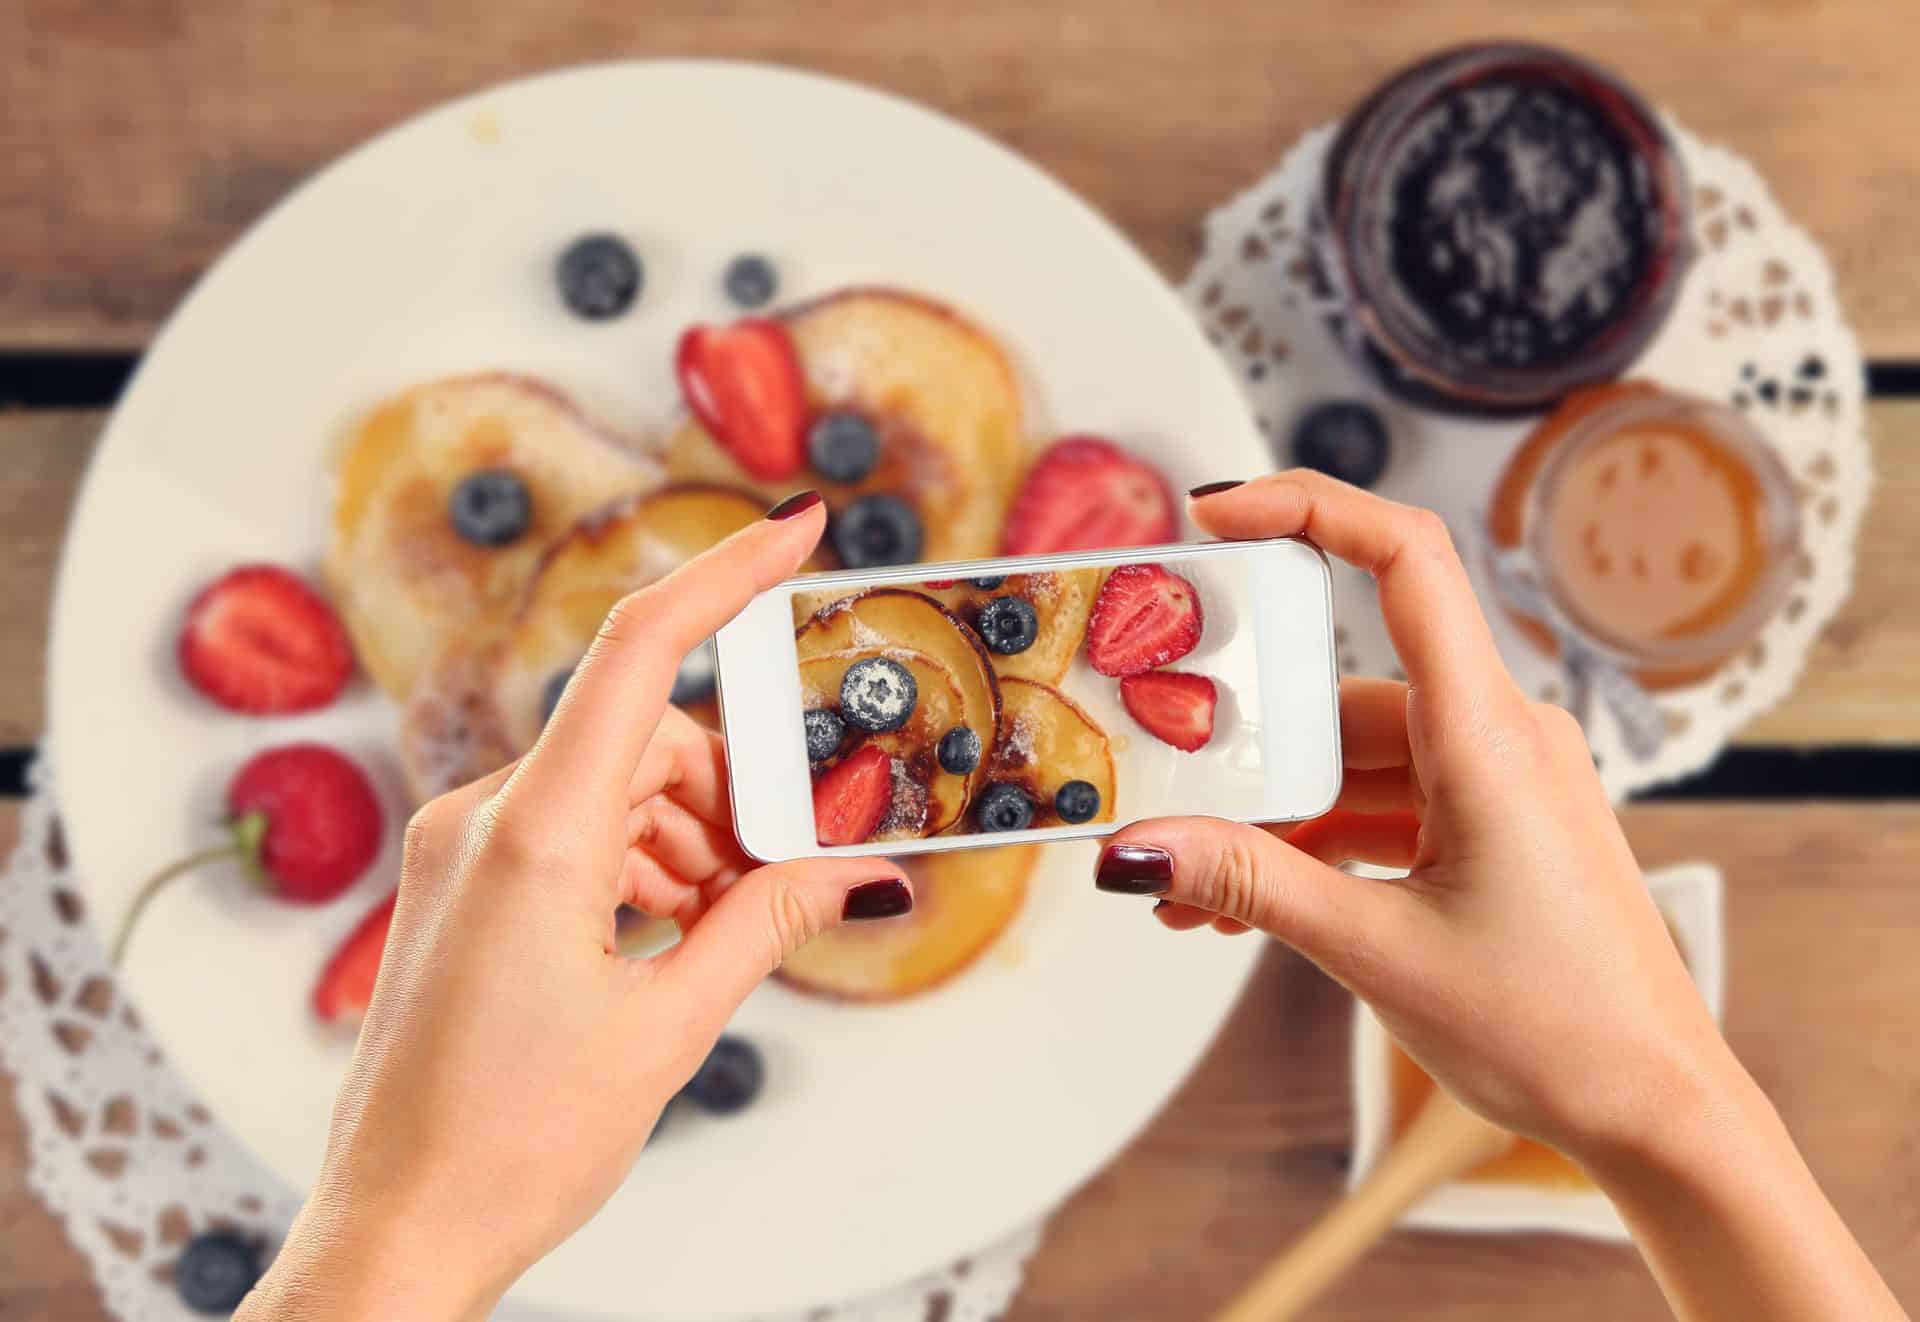 Optimized Instagram Photo of Pancakes